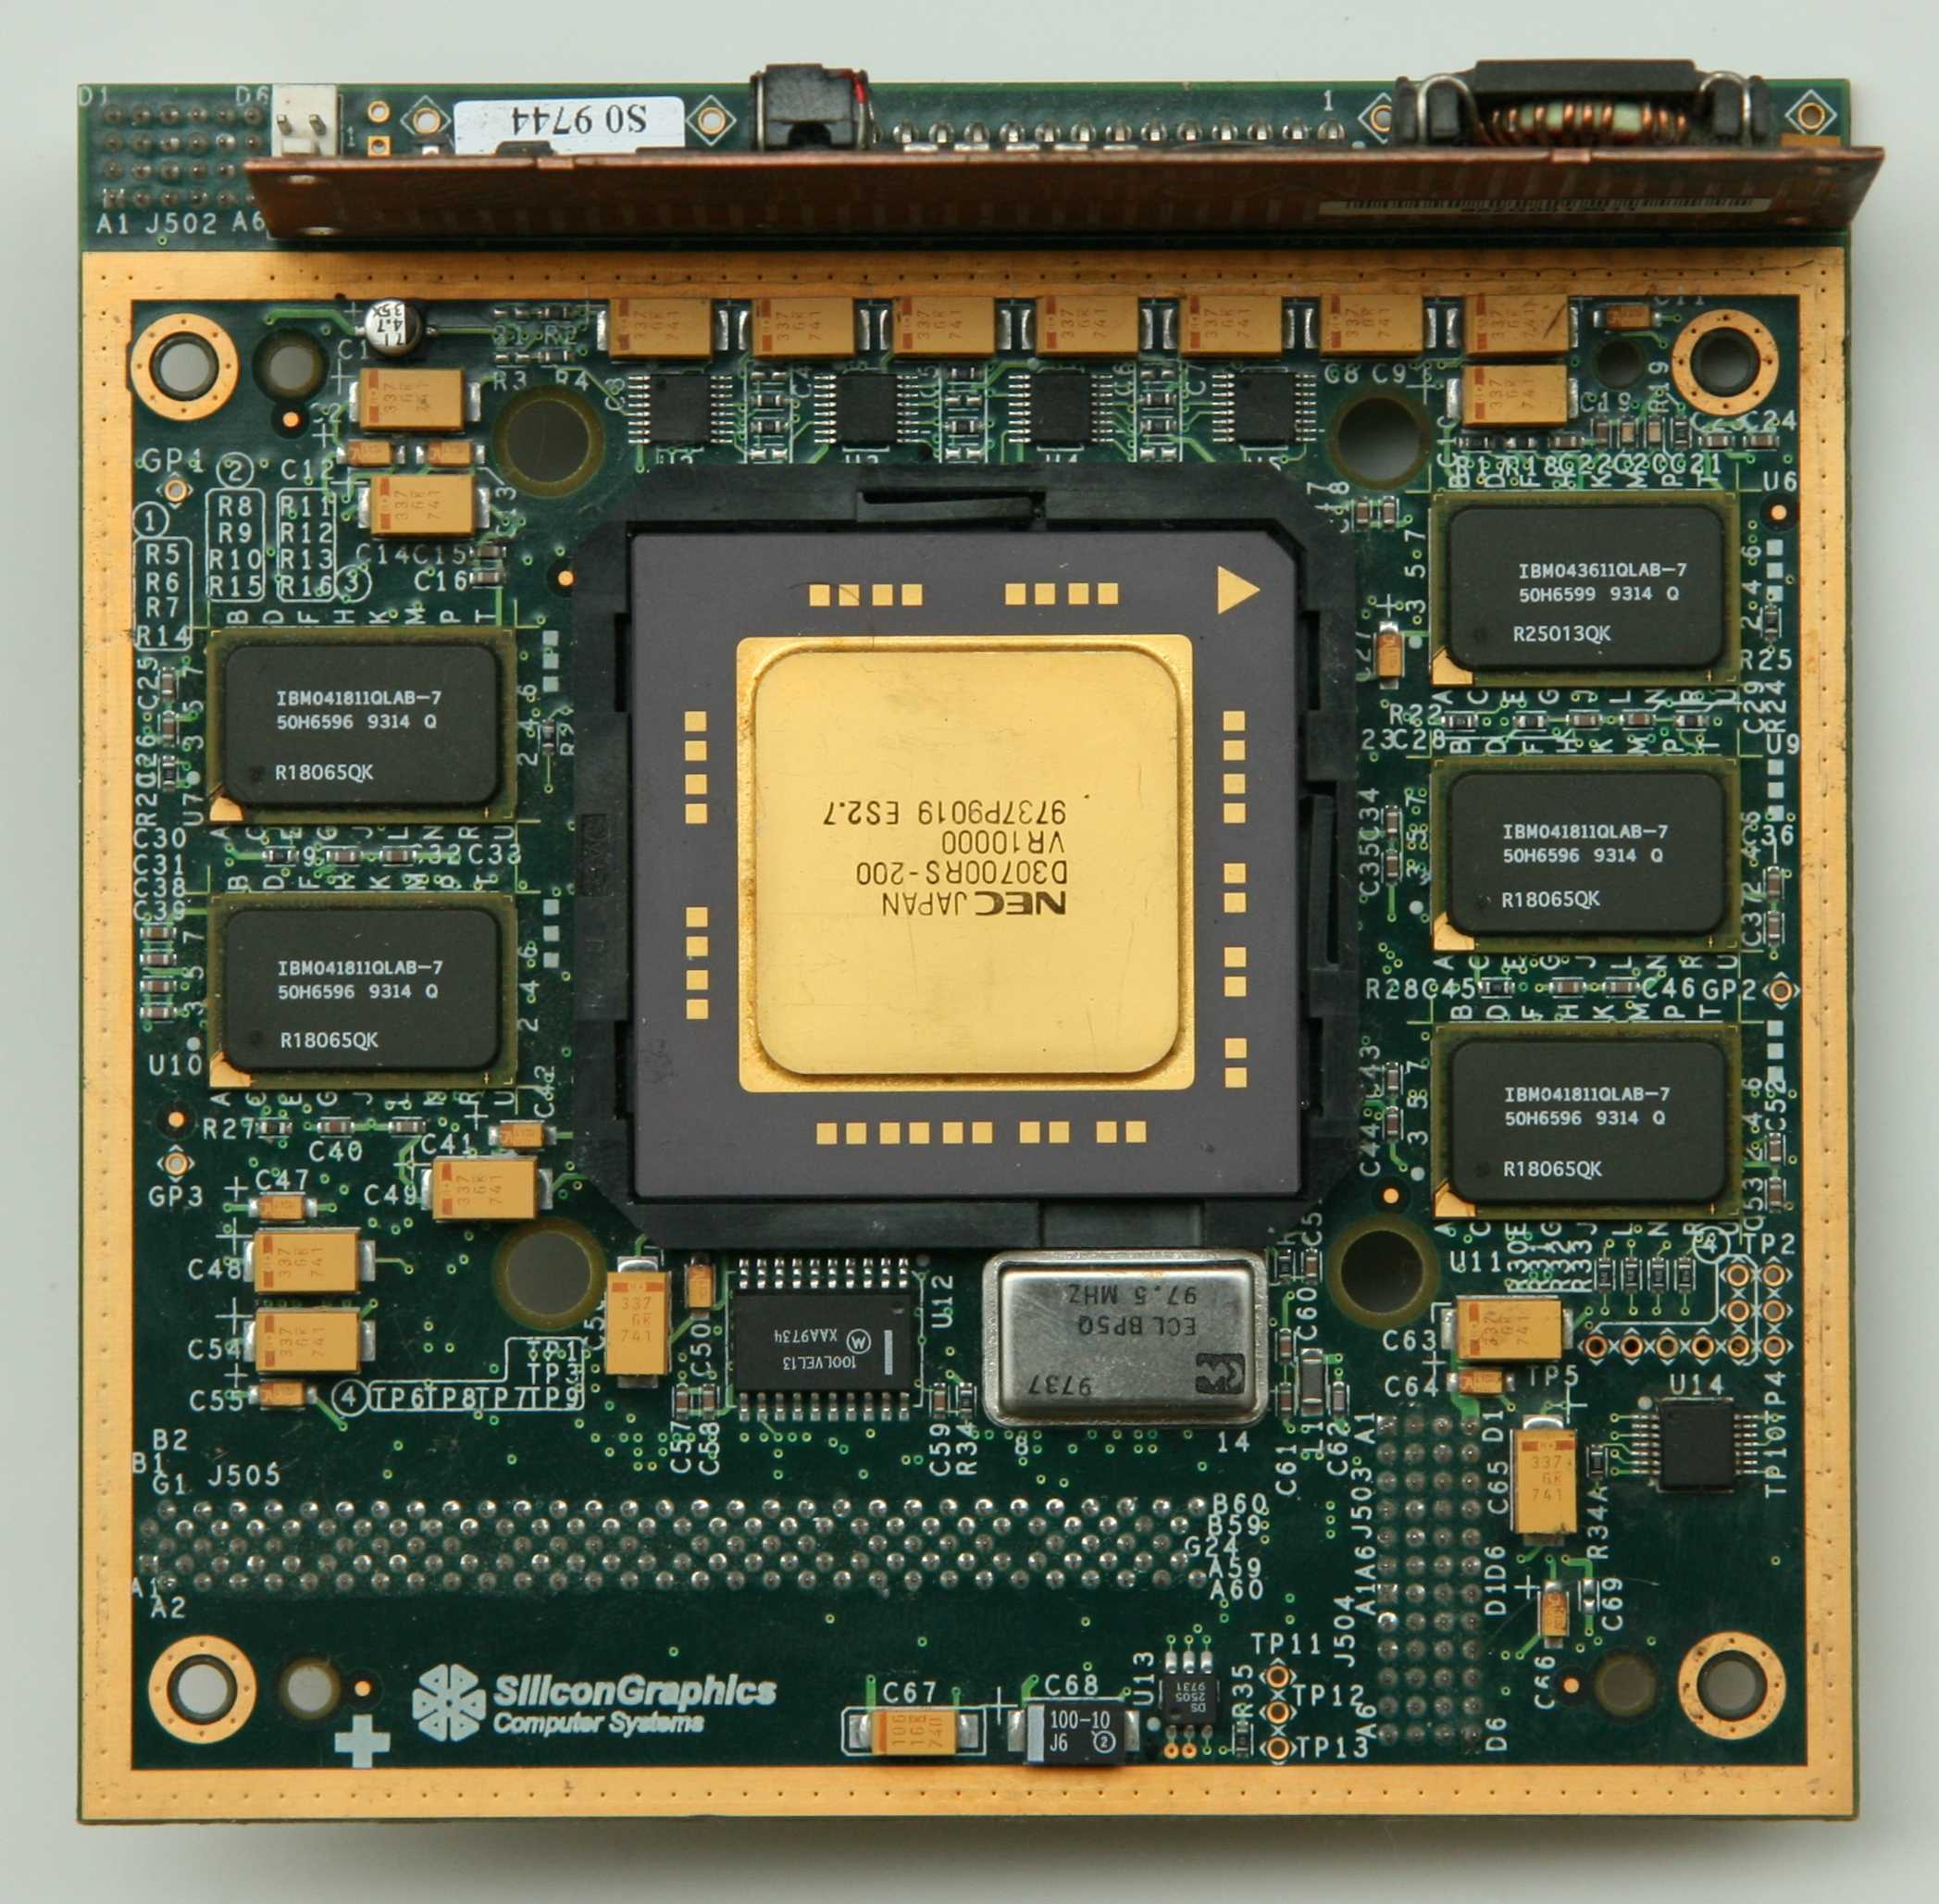 Central unit. Централь процессор. Центральный микропроцессор (CPU). Микропроцессор 160 NM. Процессор ЦПУ на ПК.